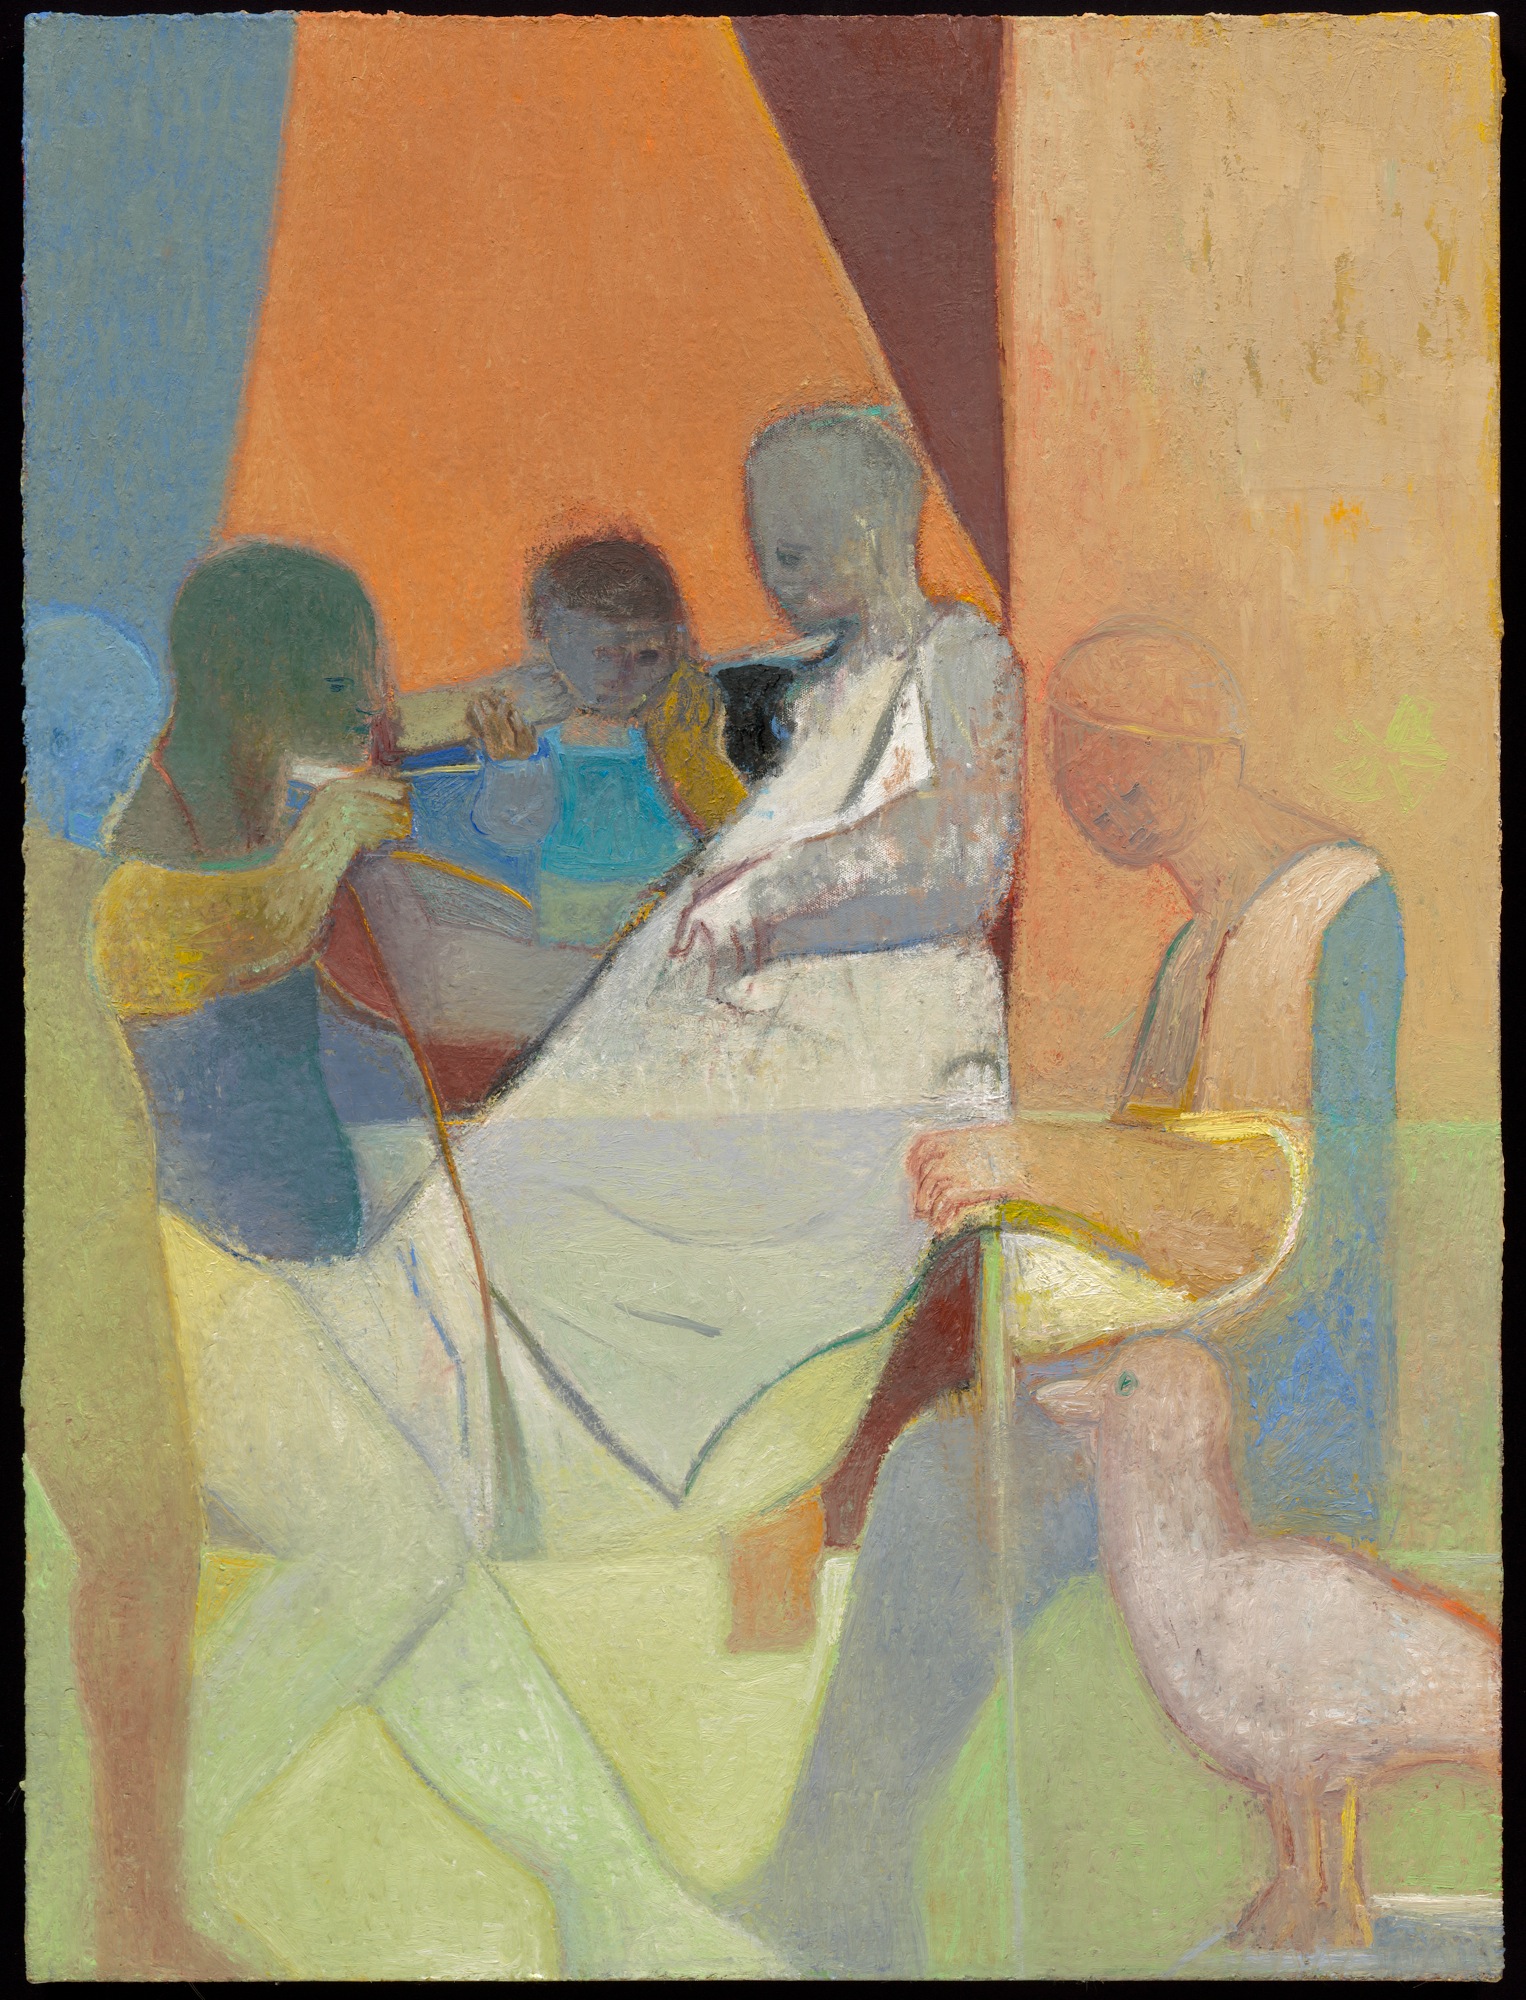 Four Figures, One Child and a Bird Again by Deborah Kahn
						at Les Yeux du Monde Art Gallery